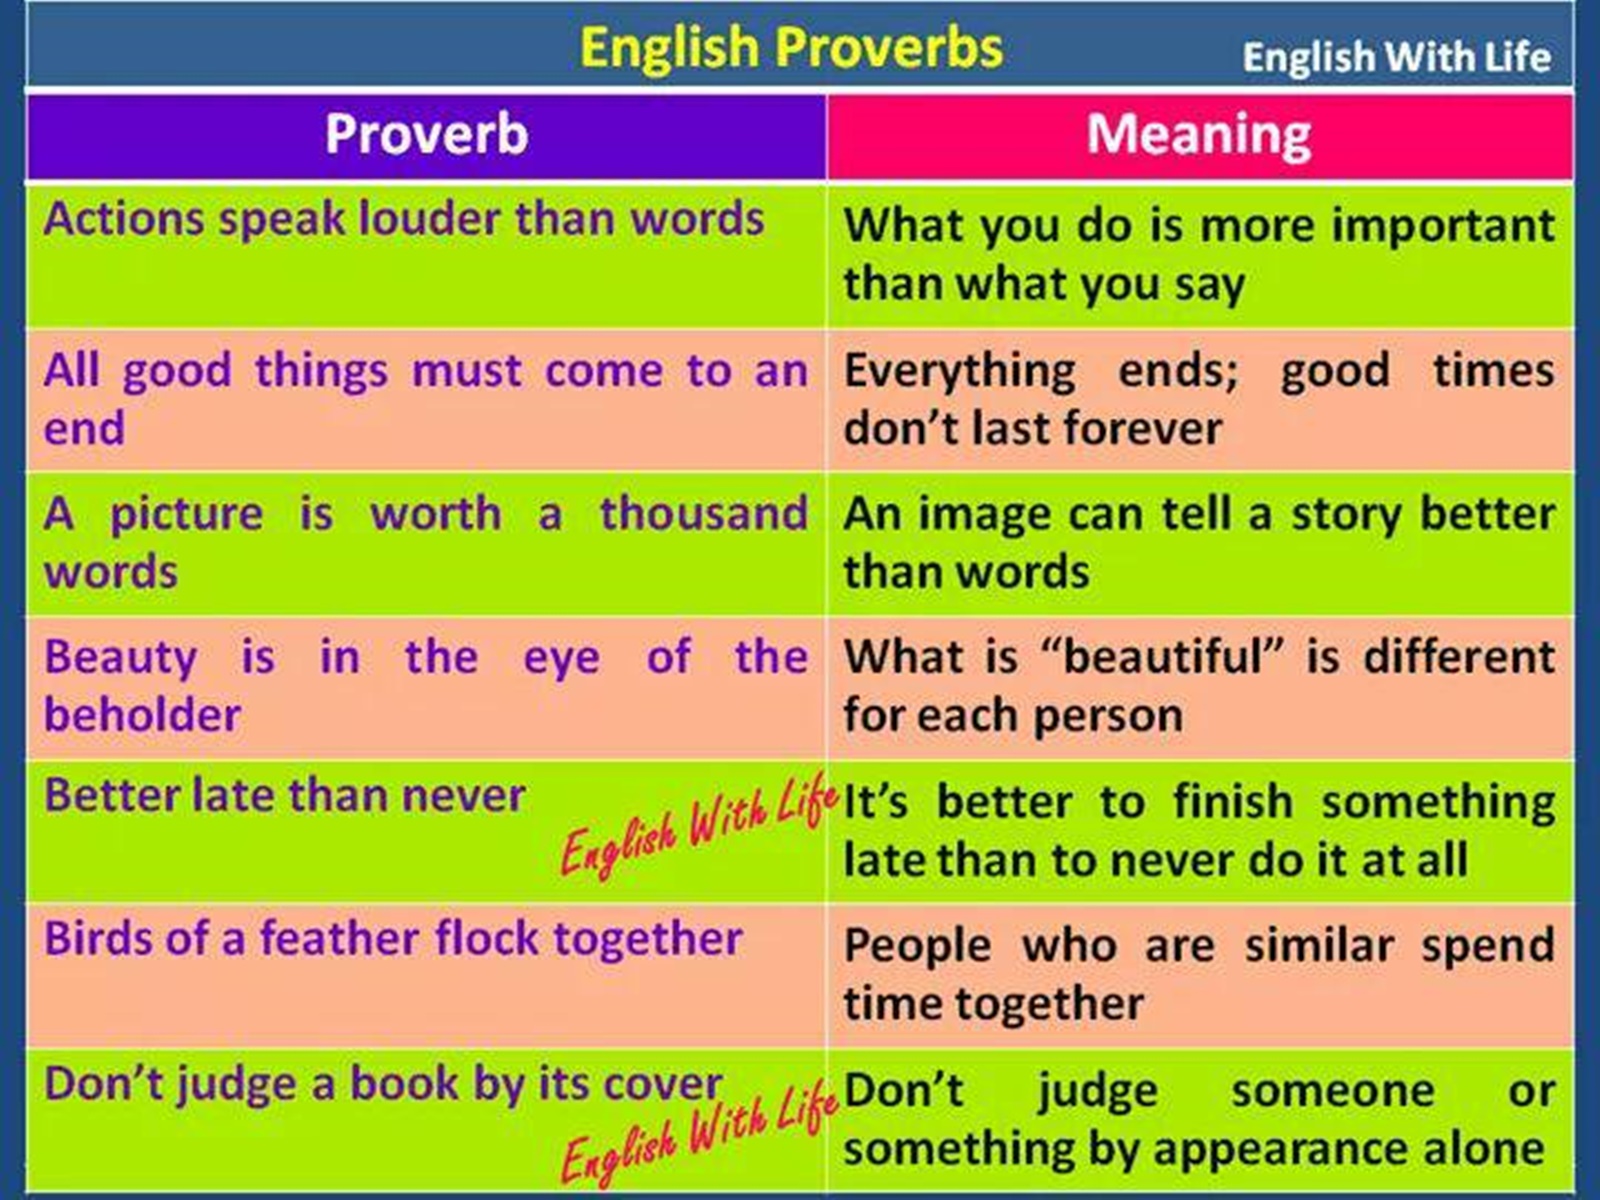 Could you speak loud. English Proverbs. Английские пословицы. Английские пословицы и поговорки. Пословицы на английском языке.